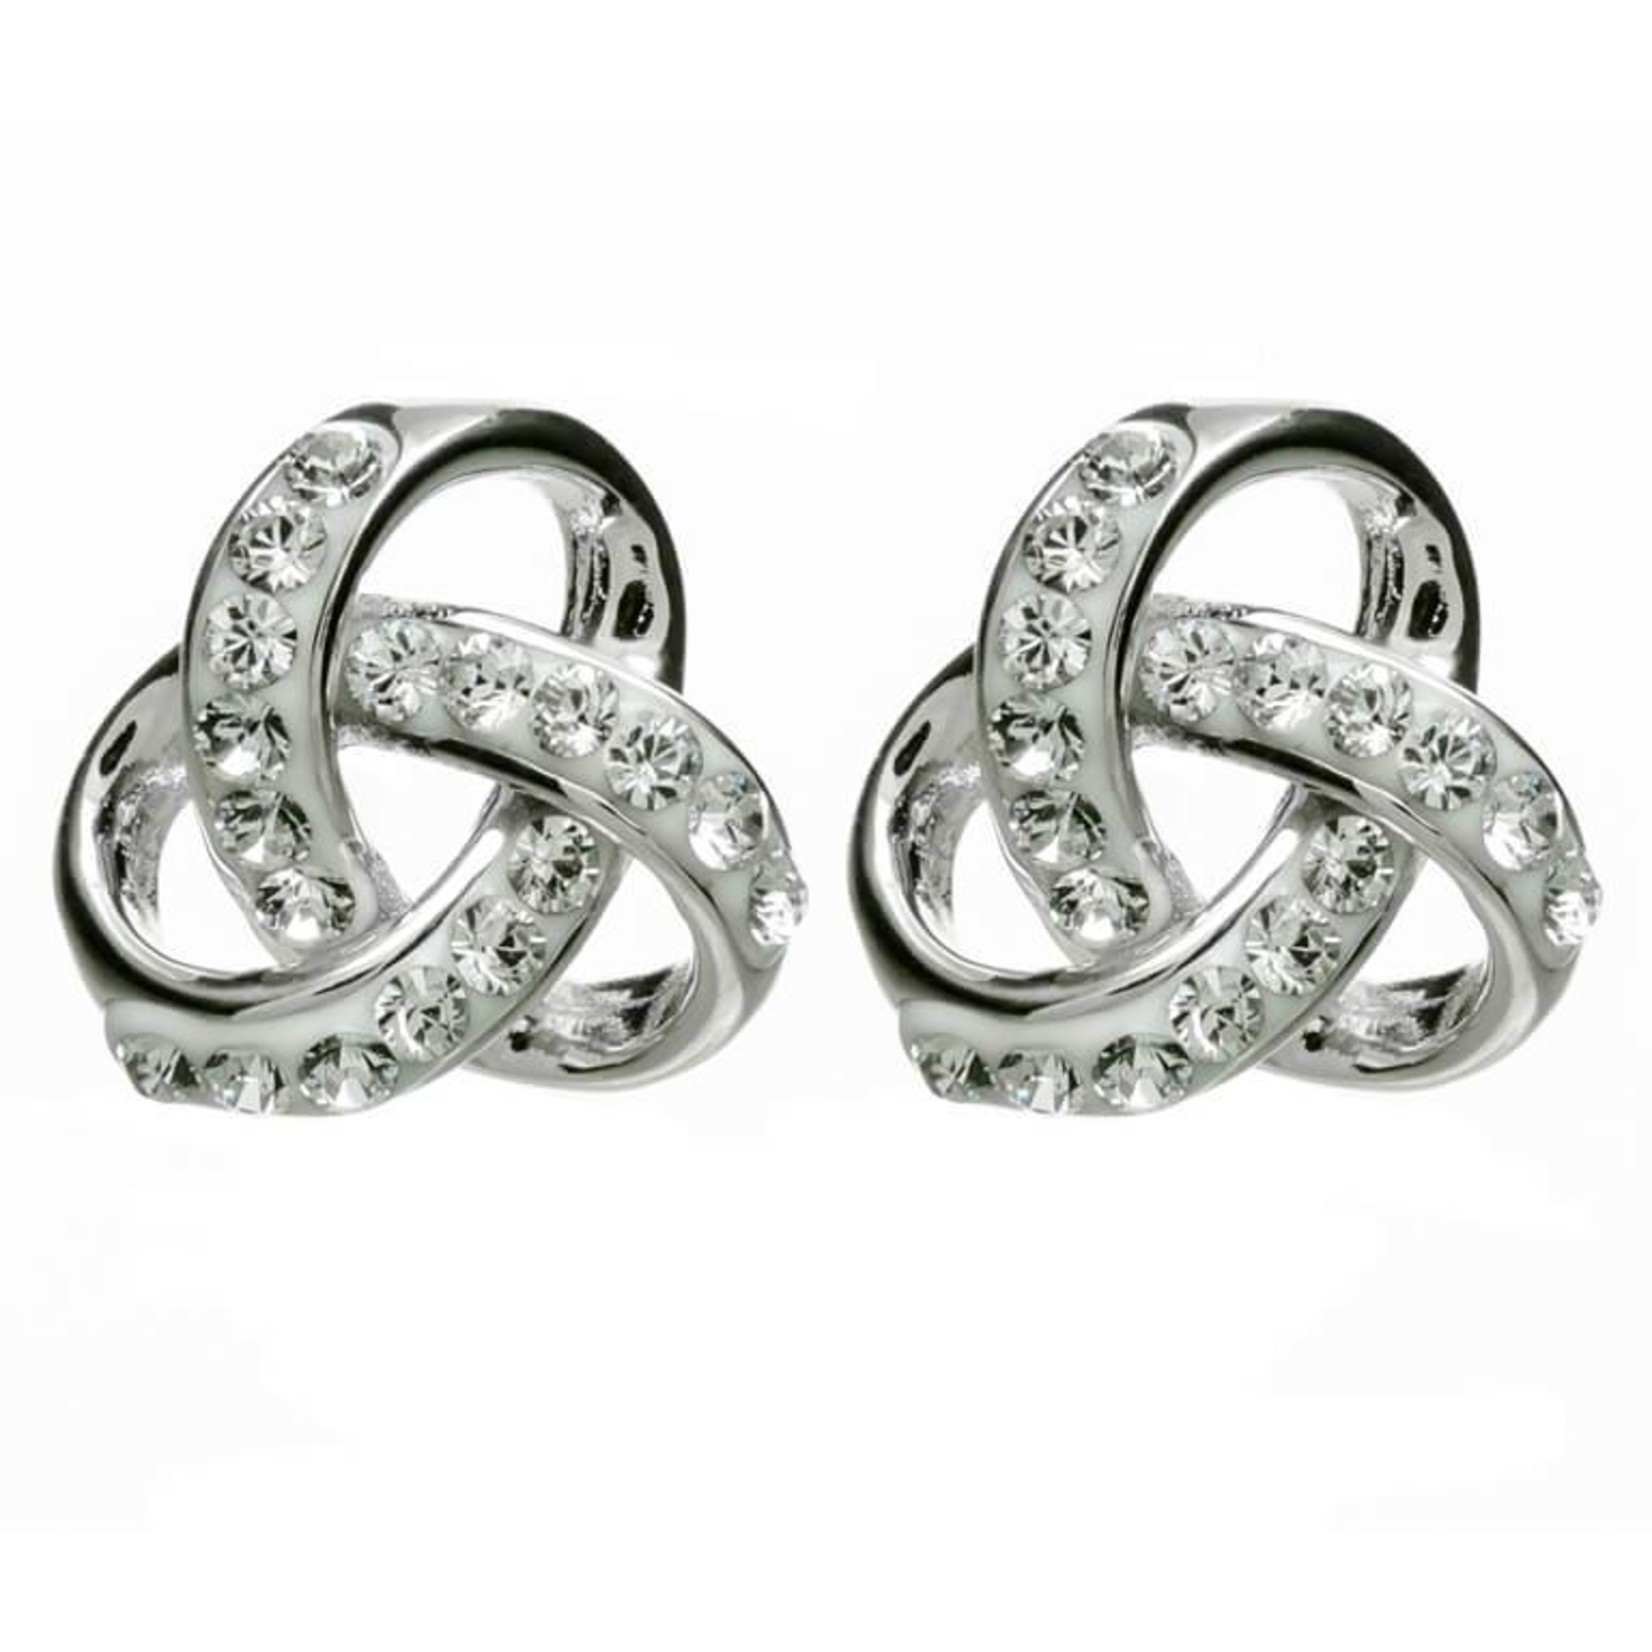 Shanore Rounded Trinity Knot Swarovski Crystal Earrings